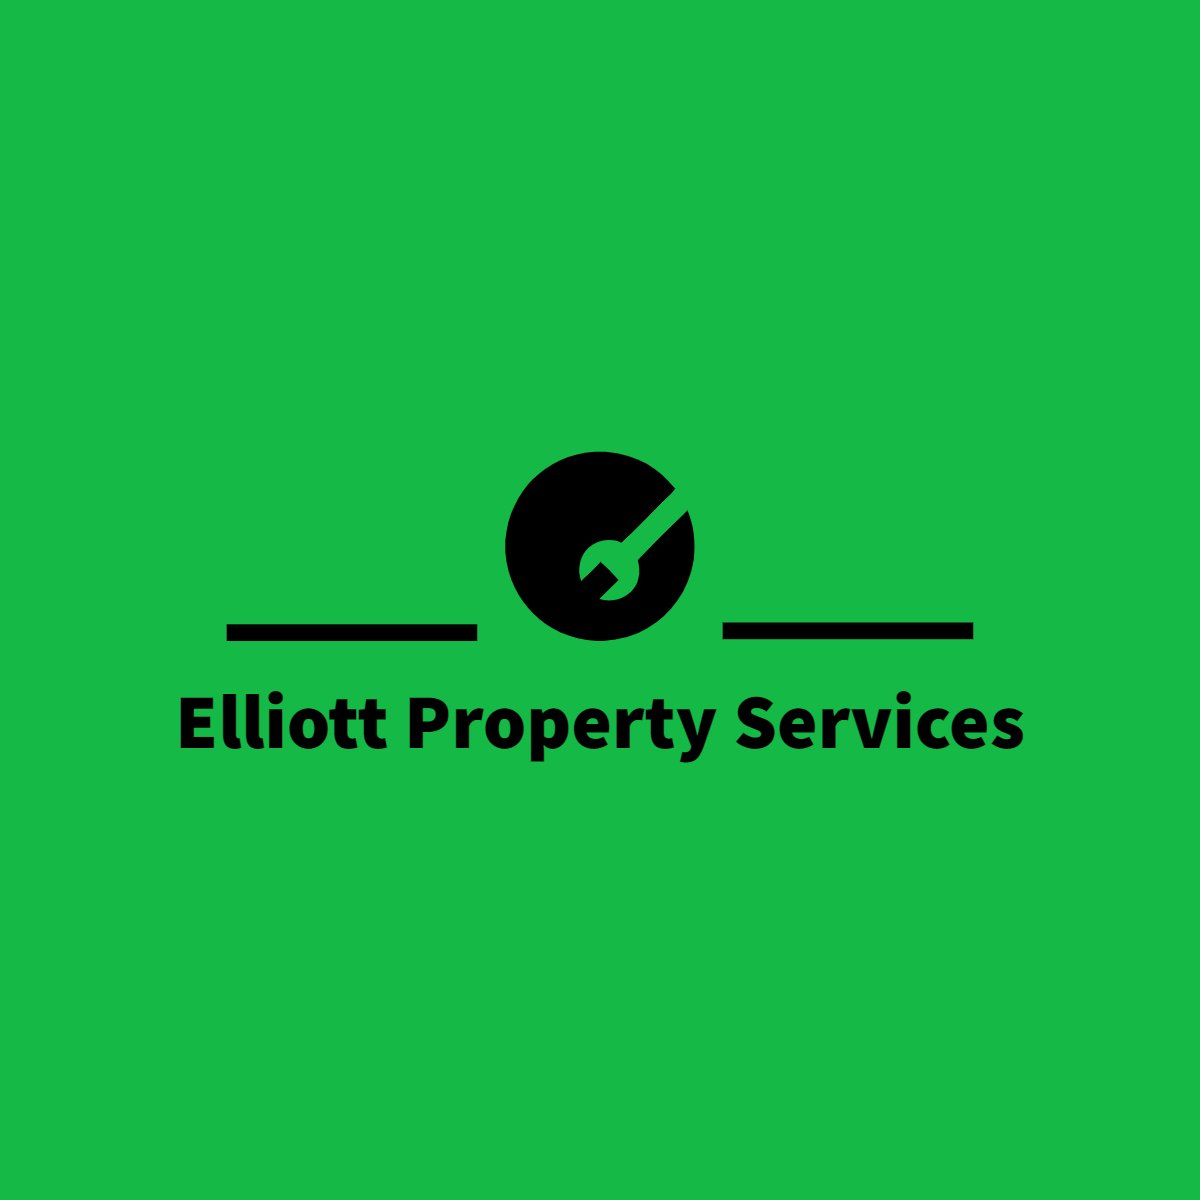 Elliott Property Services